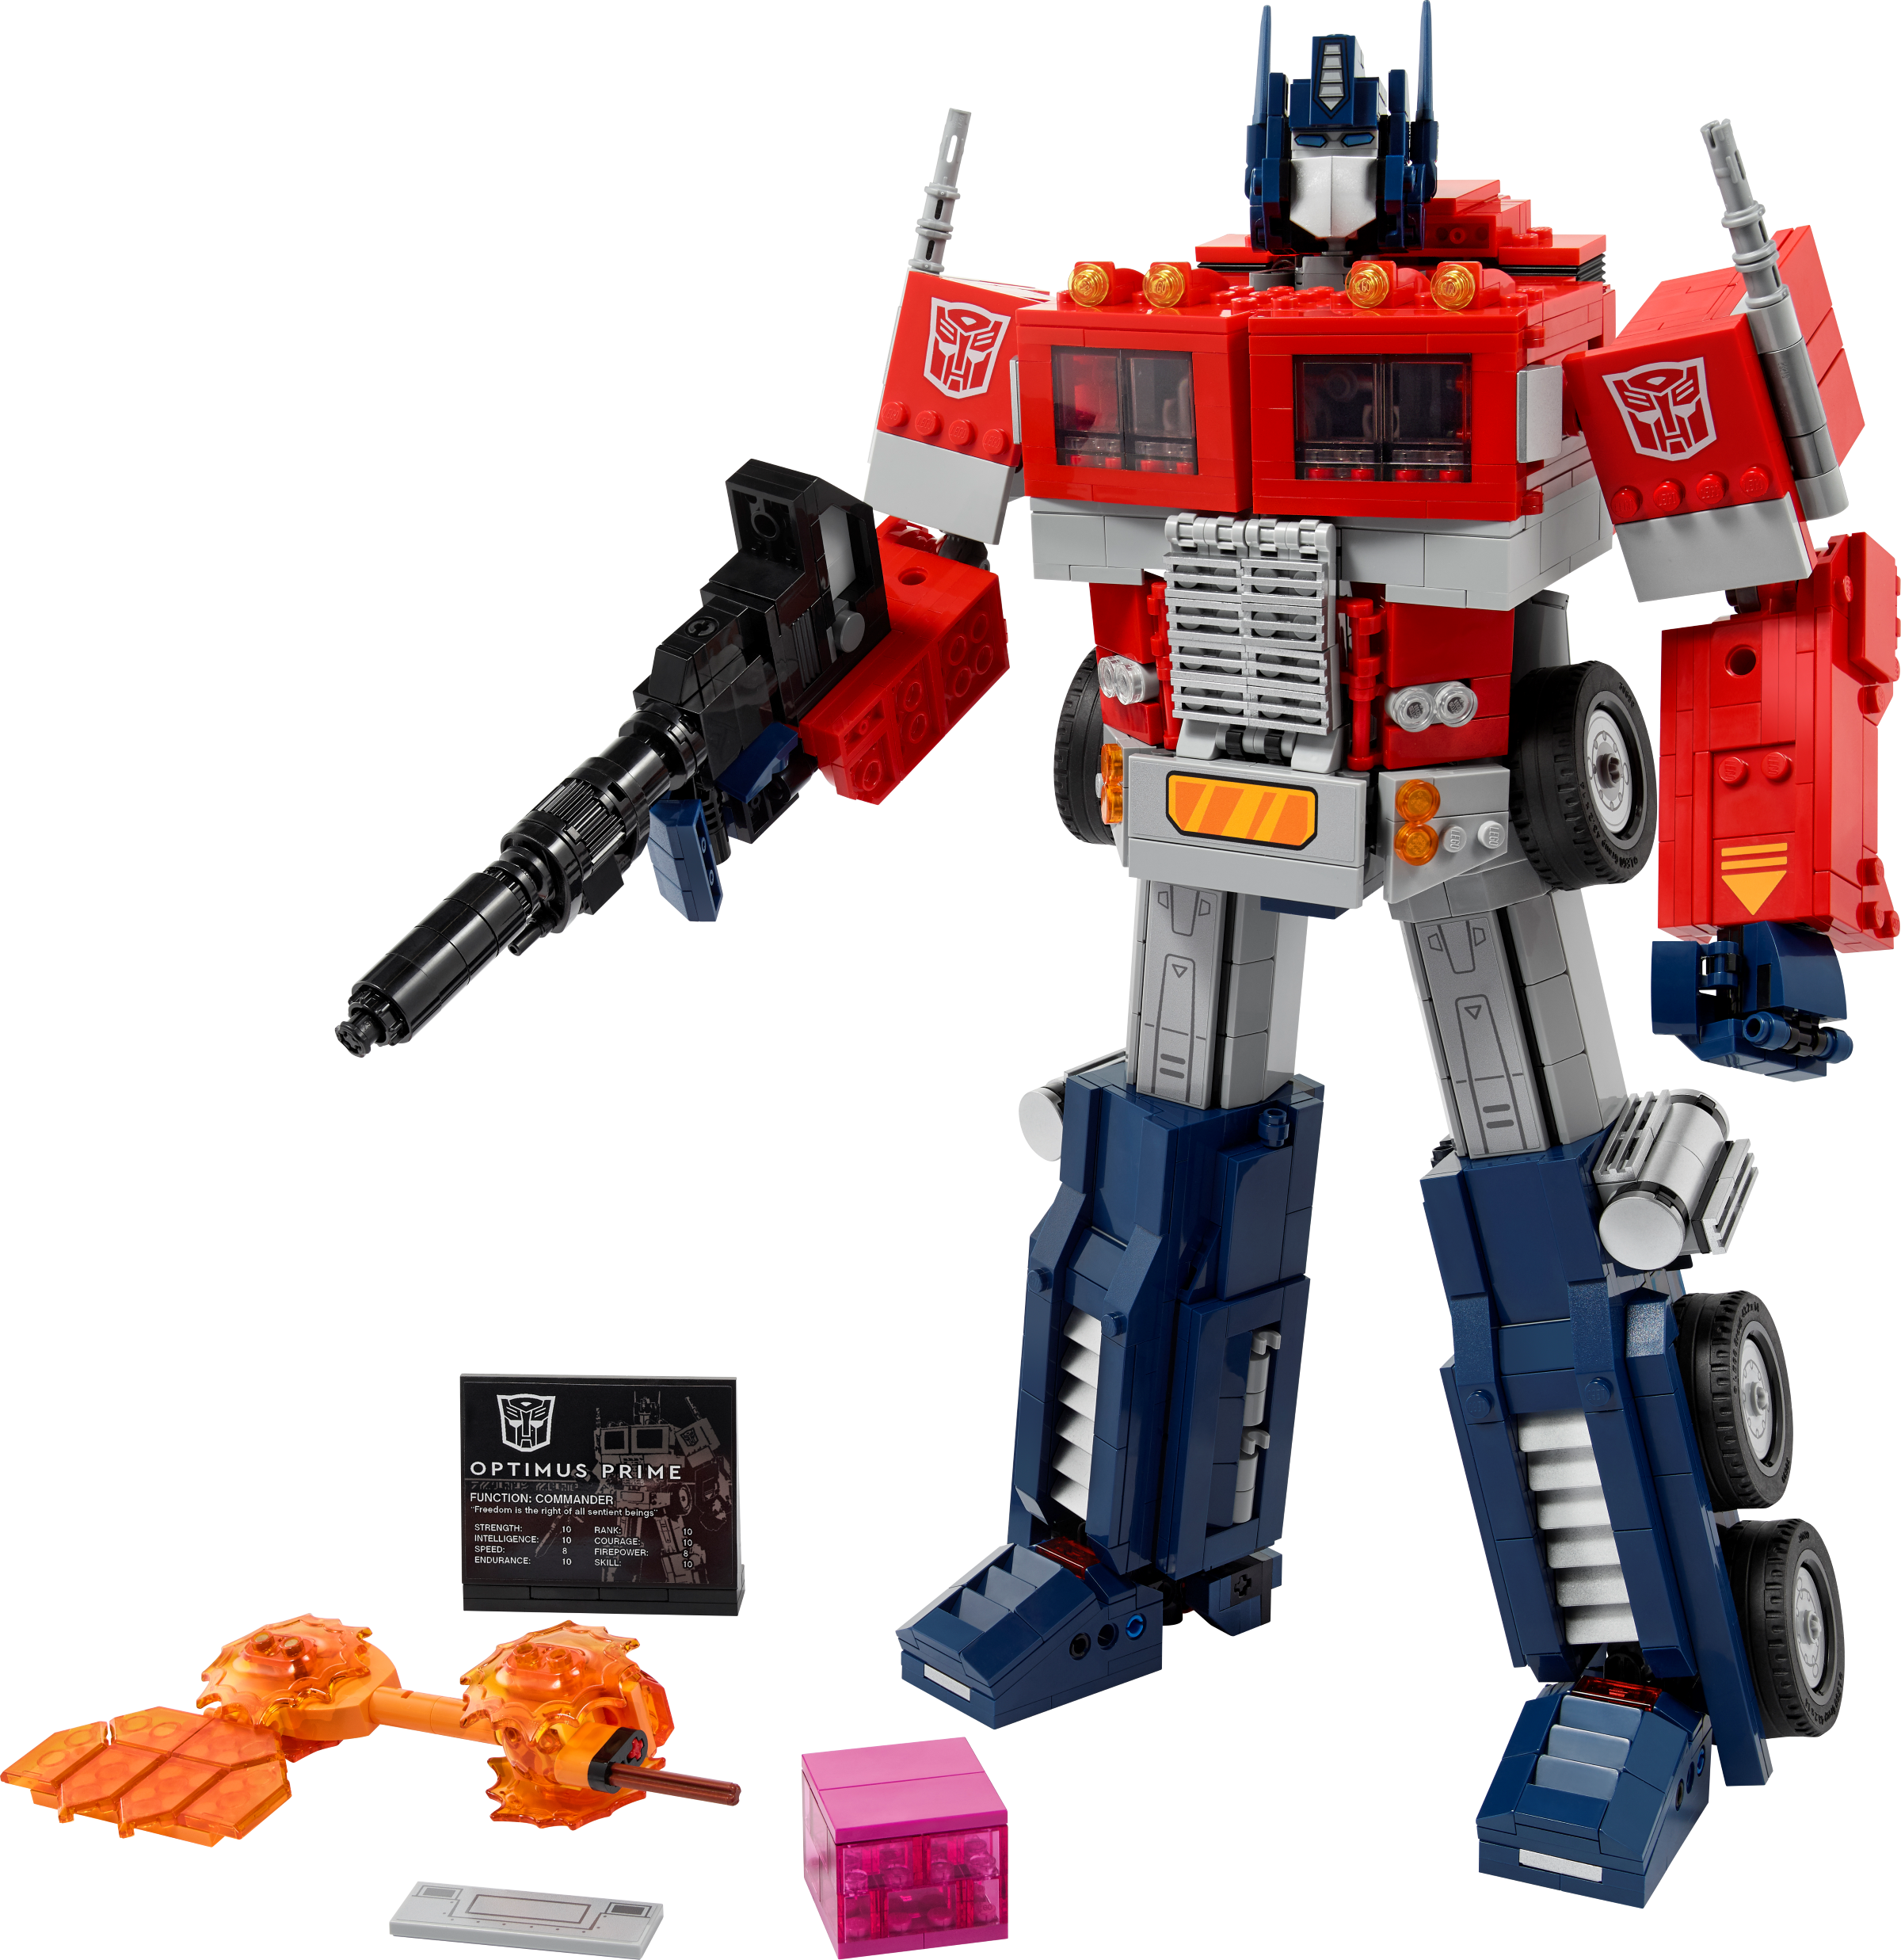 Transformers G1 Autobot Leader Optimus Prime Toy Figure Model Collection SET 